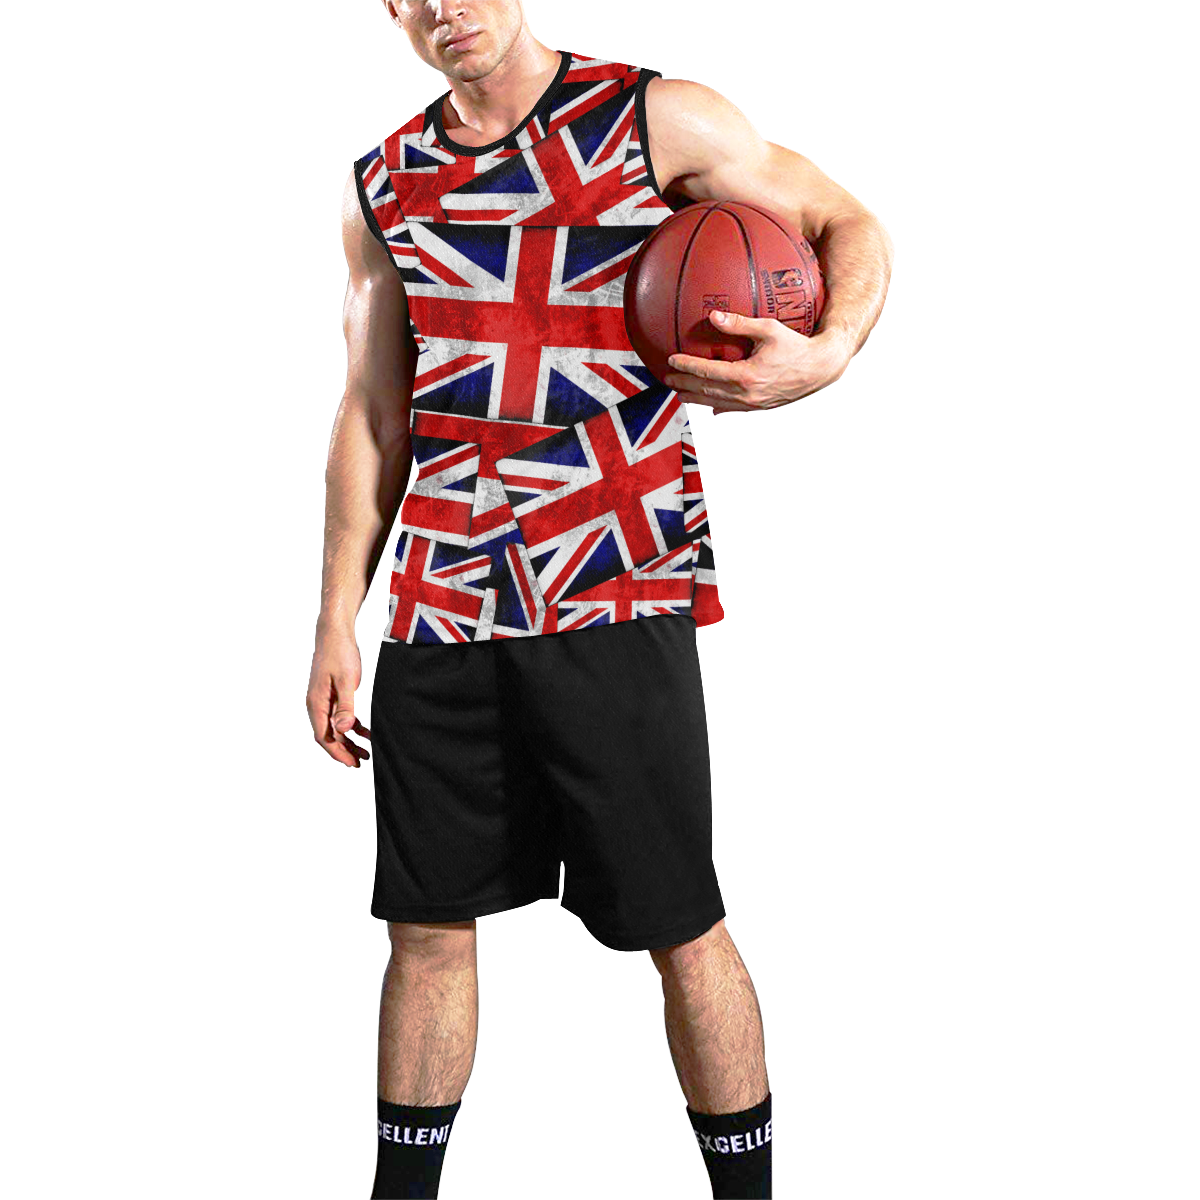 Union Jack British UK Flag  - Black All Over Print Basketball Uniform